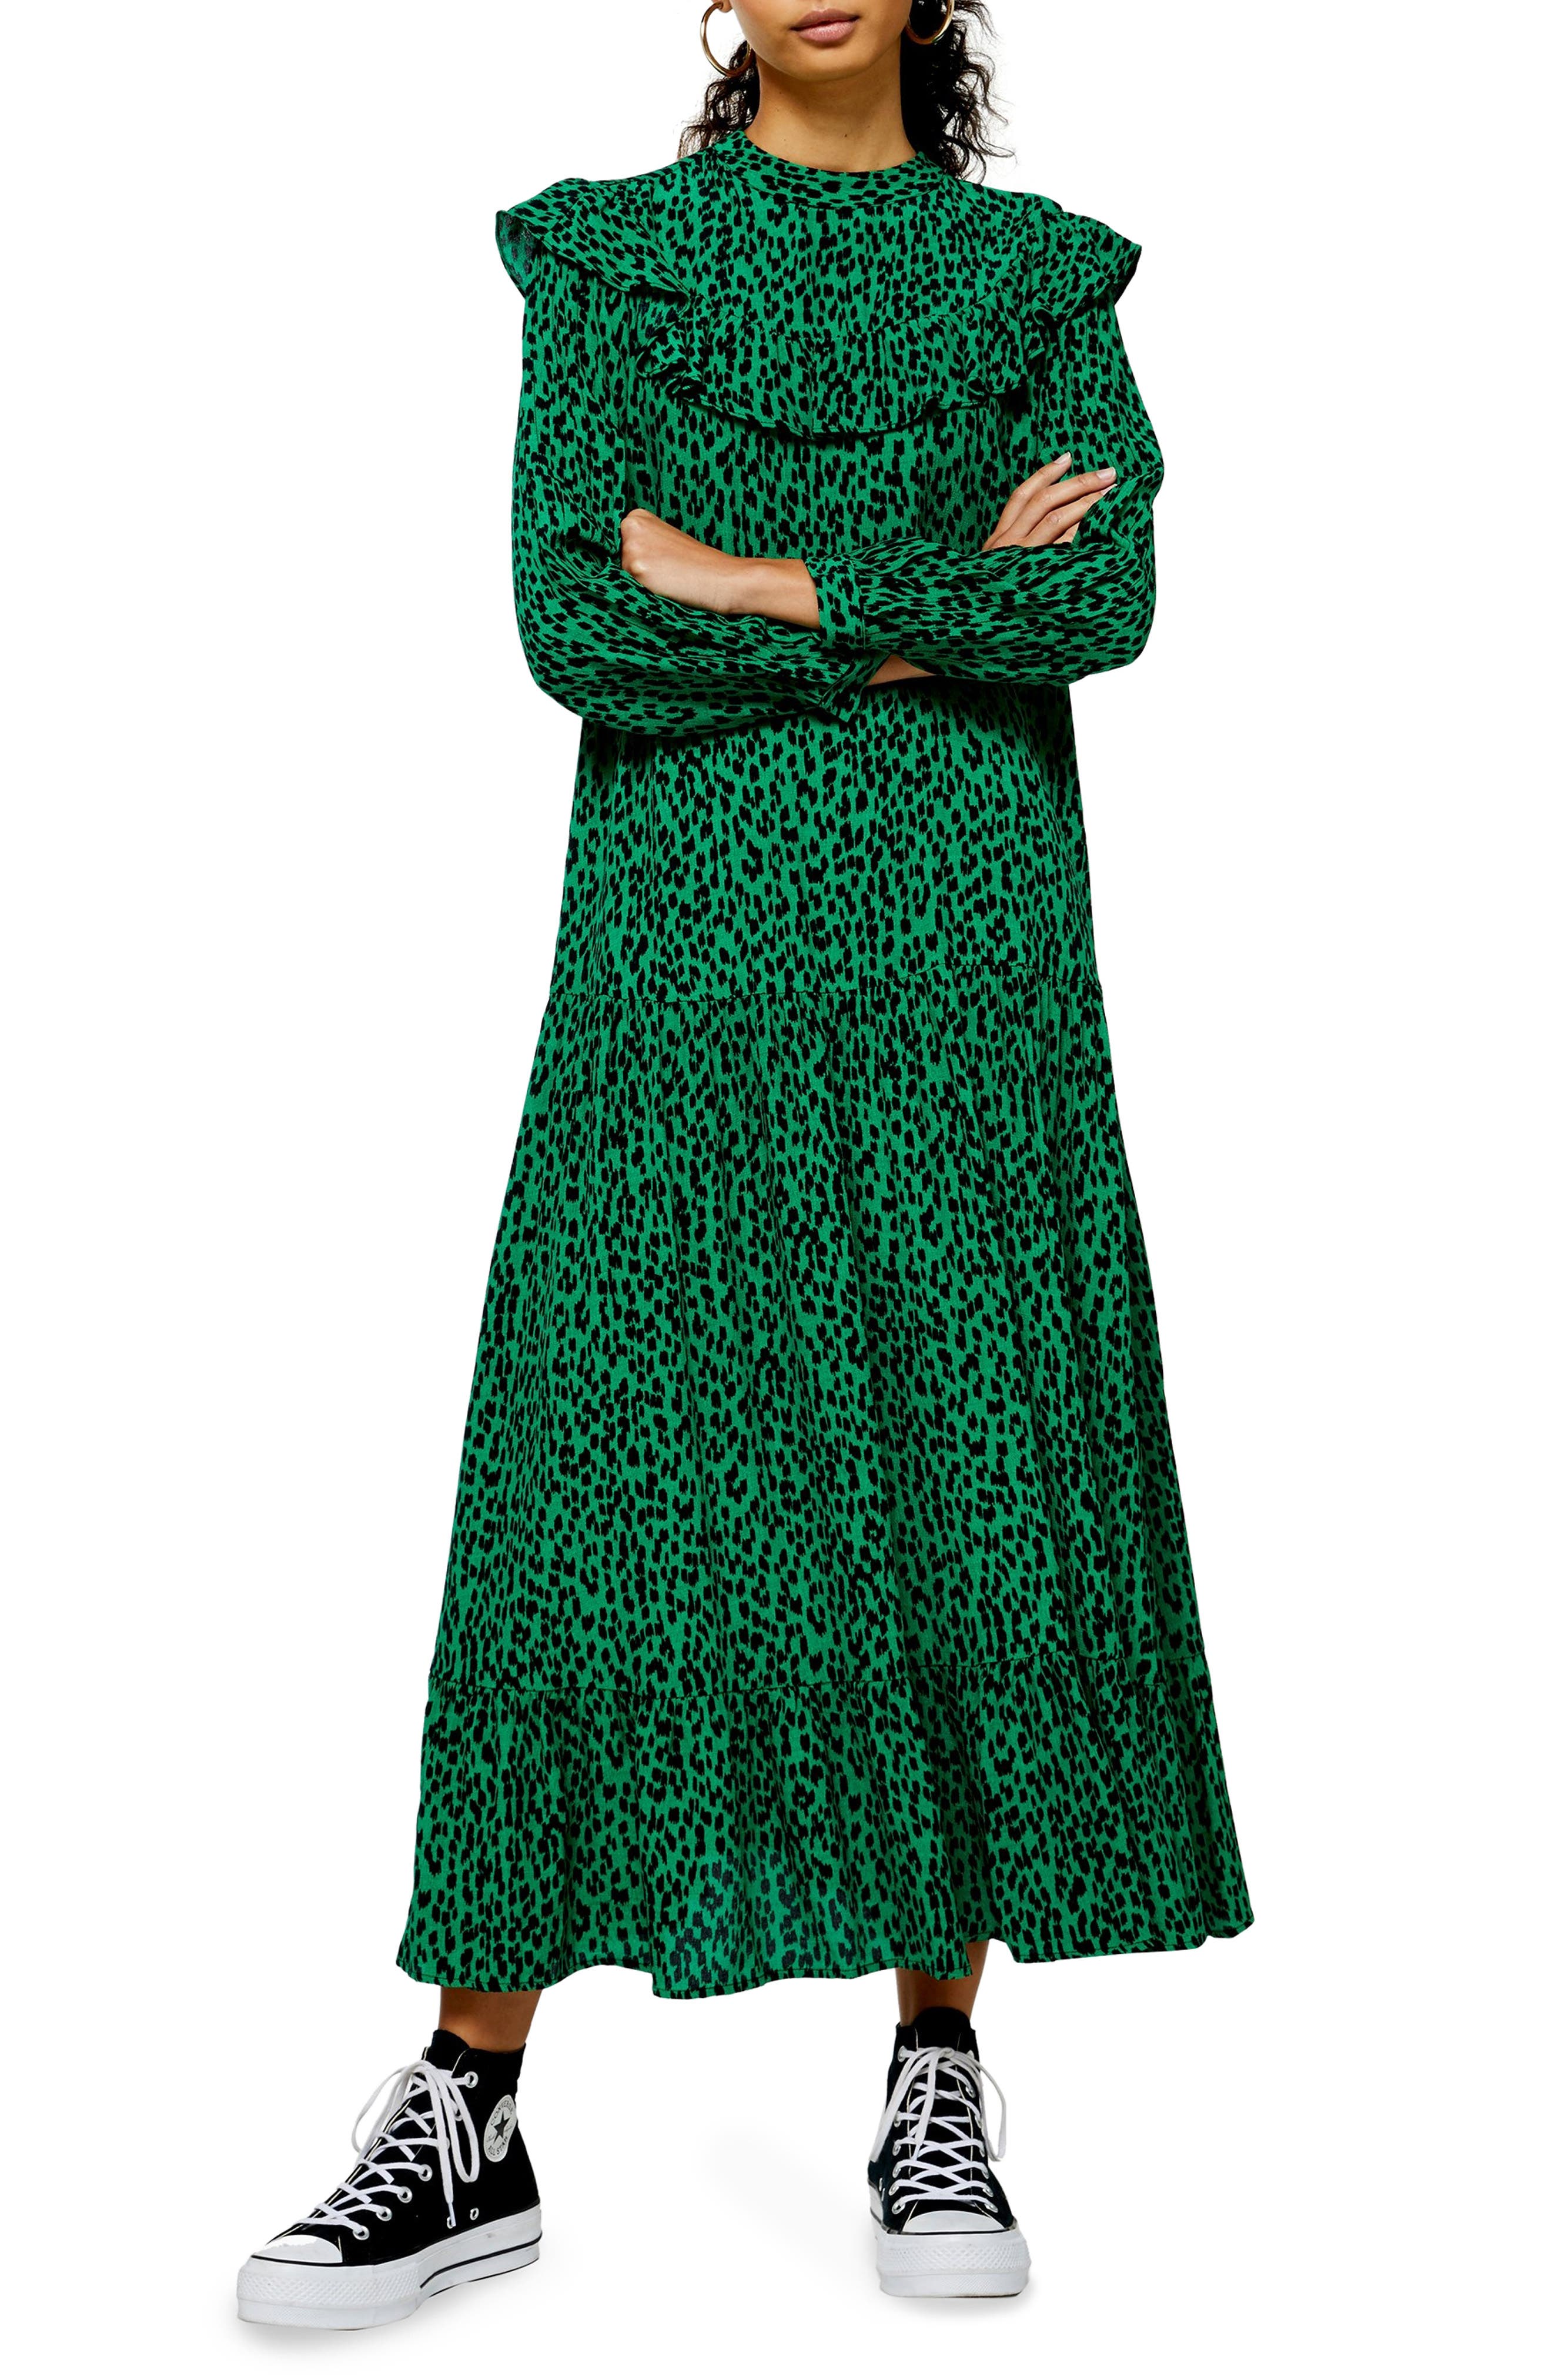 animal print green dress